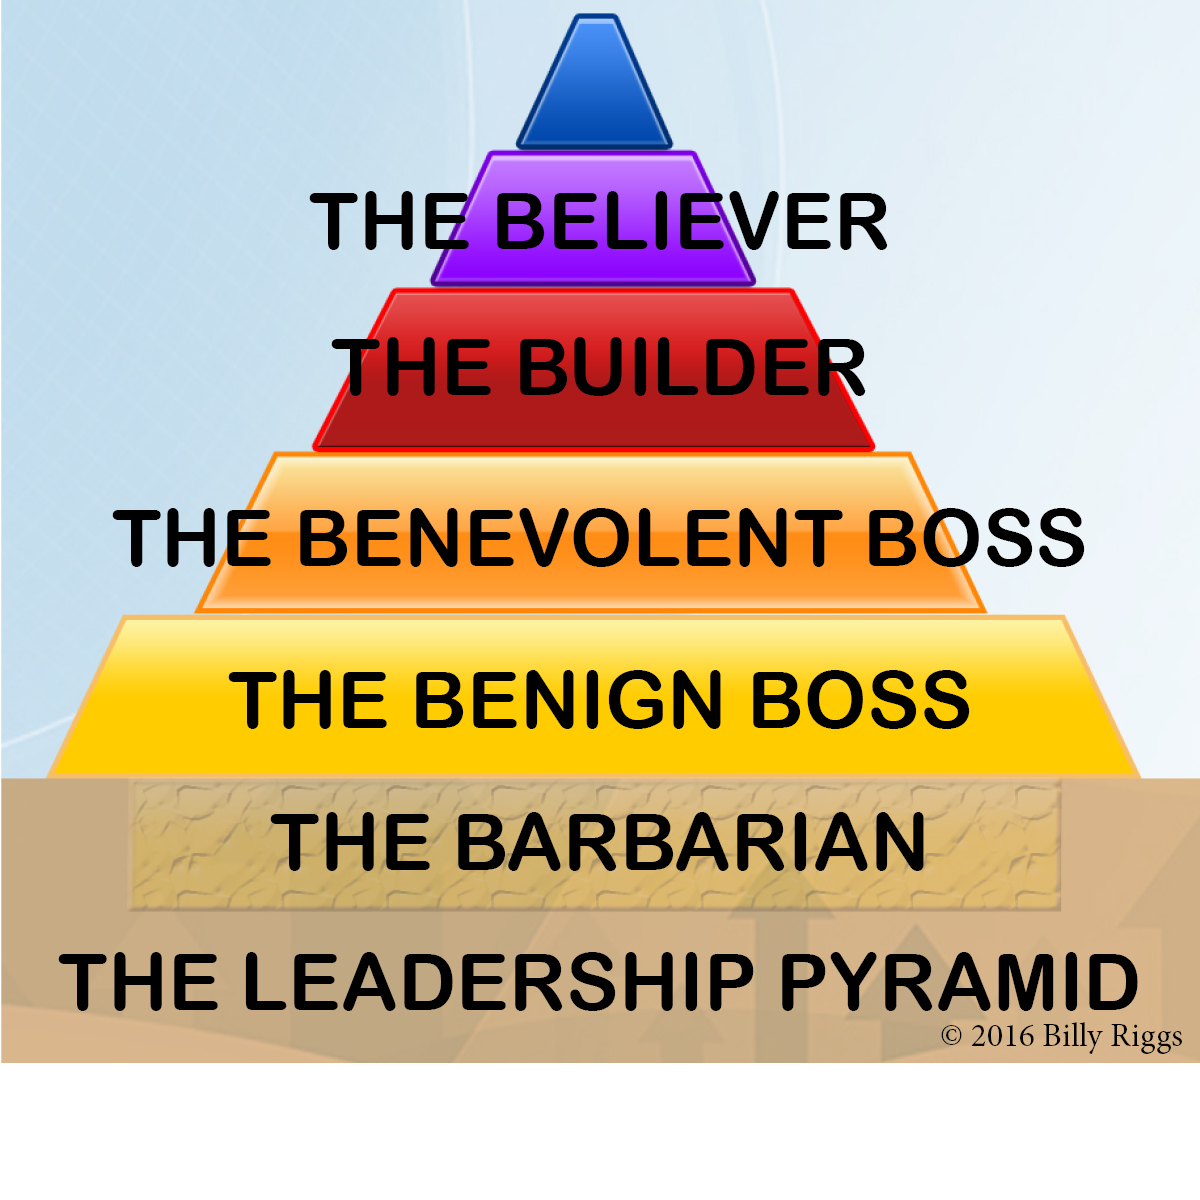 Billy Riggs' Leadership Pyramid